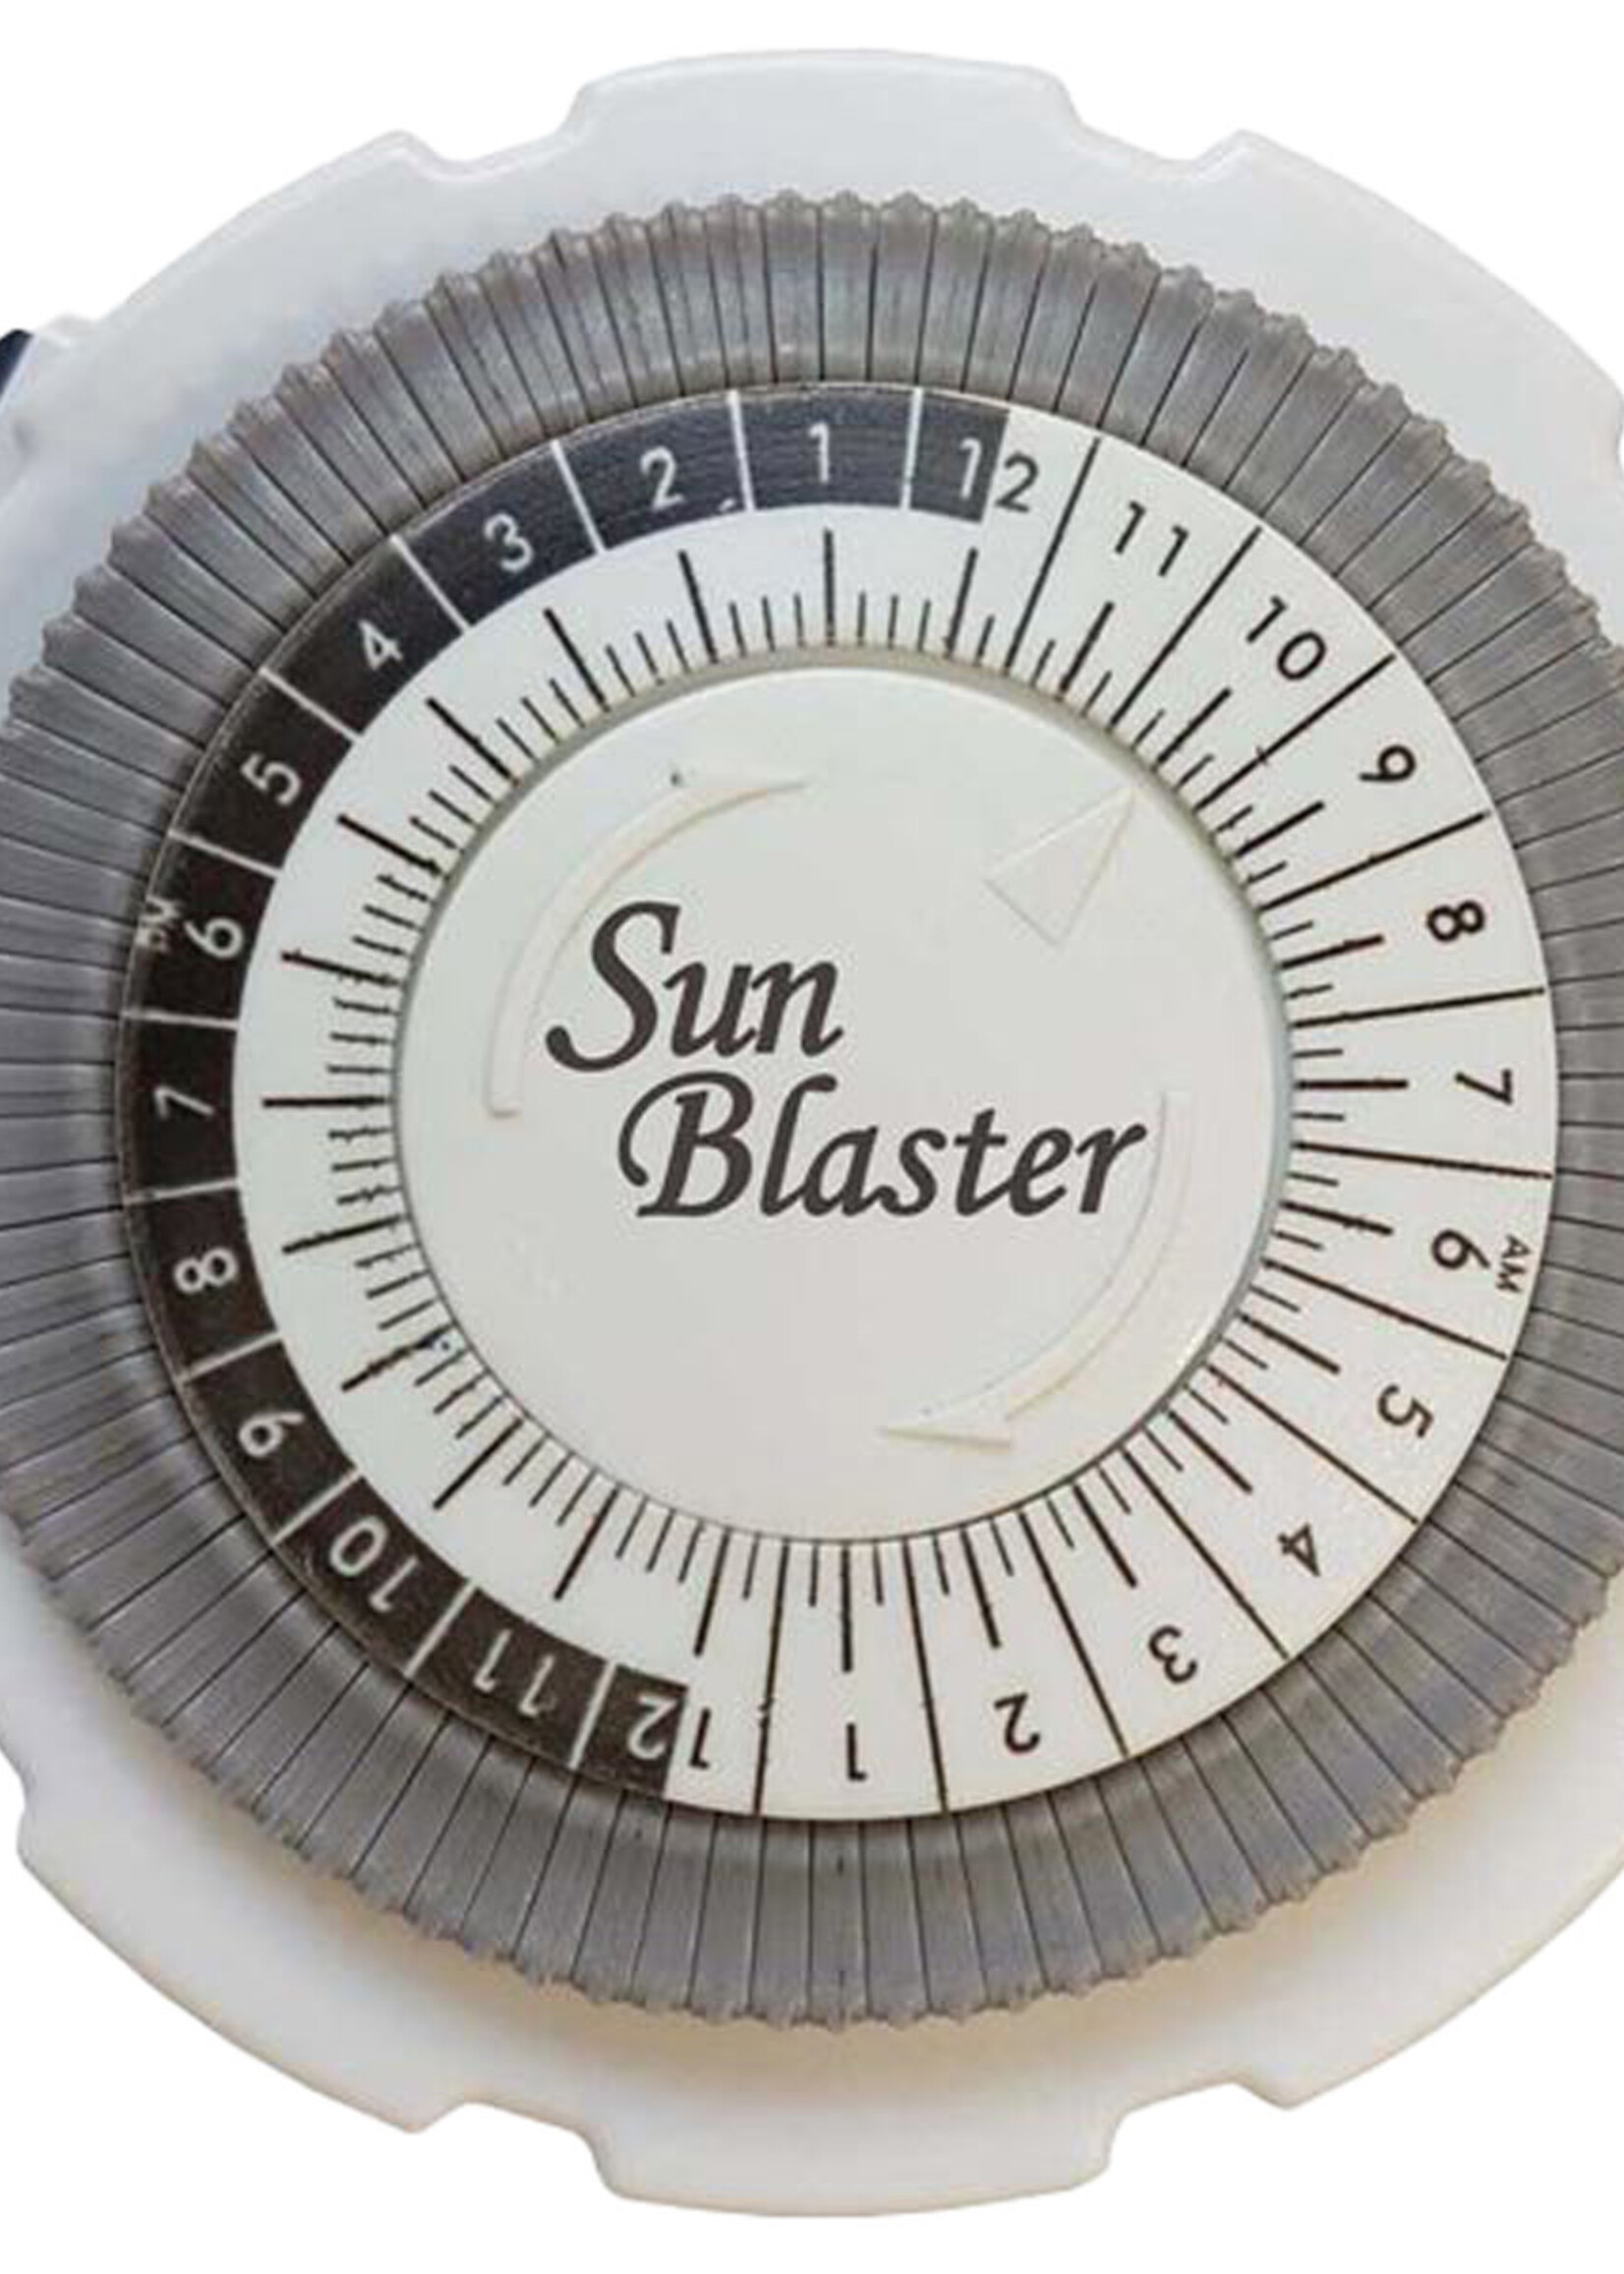 Sunblaster Sunblaster 24 hour Analog Timer